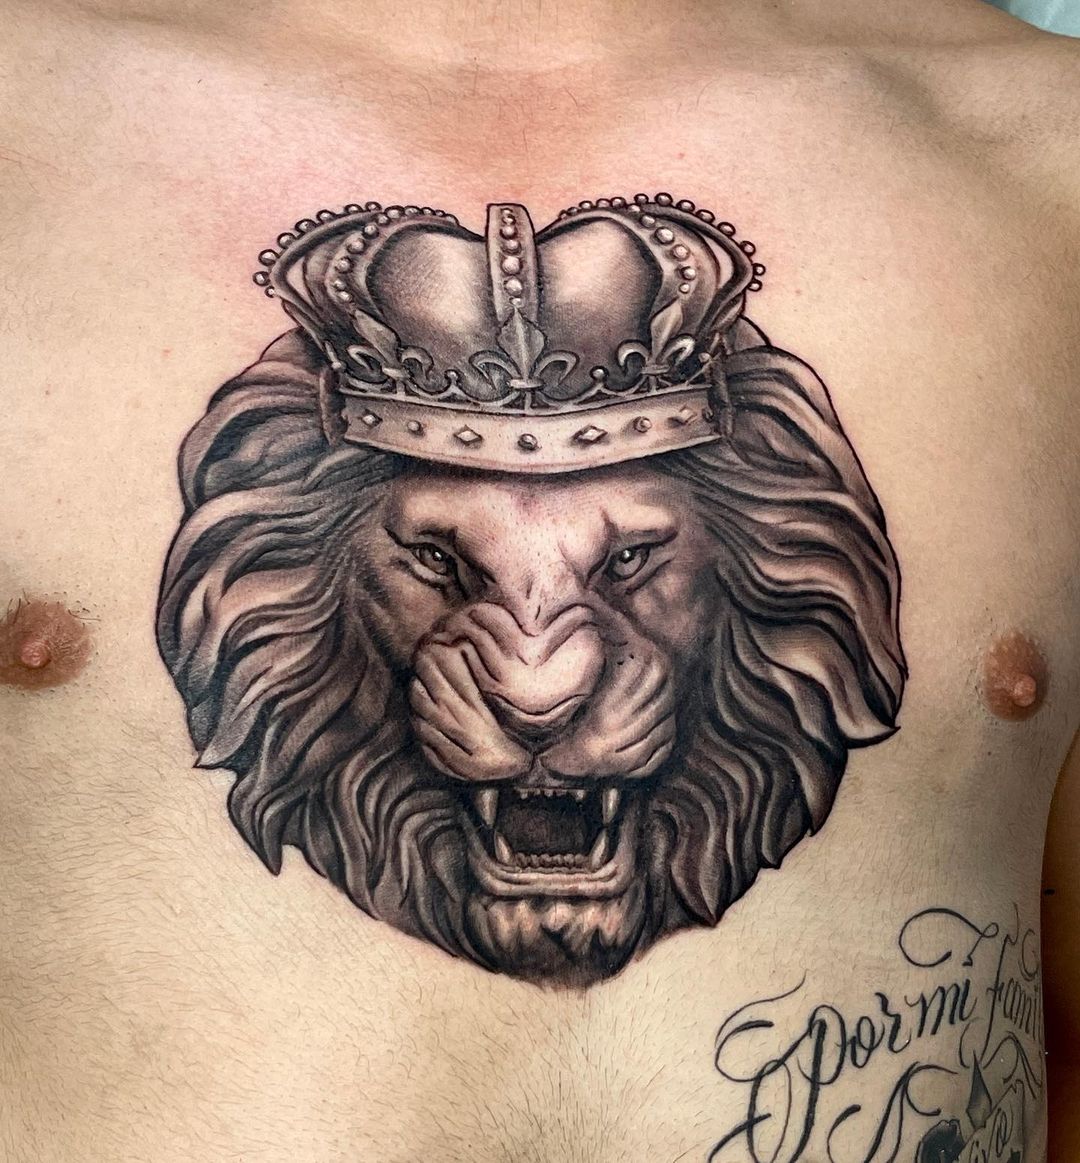 Tattoo uploaded by Kshitij Gurav • Lion tattoo on chest • Tattoodo